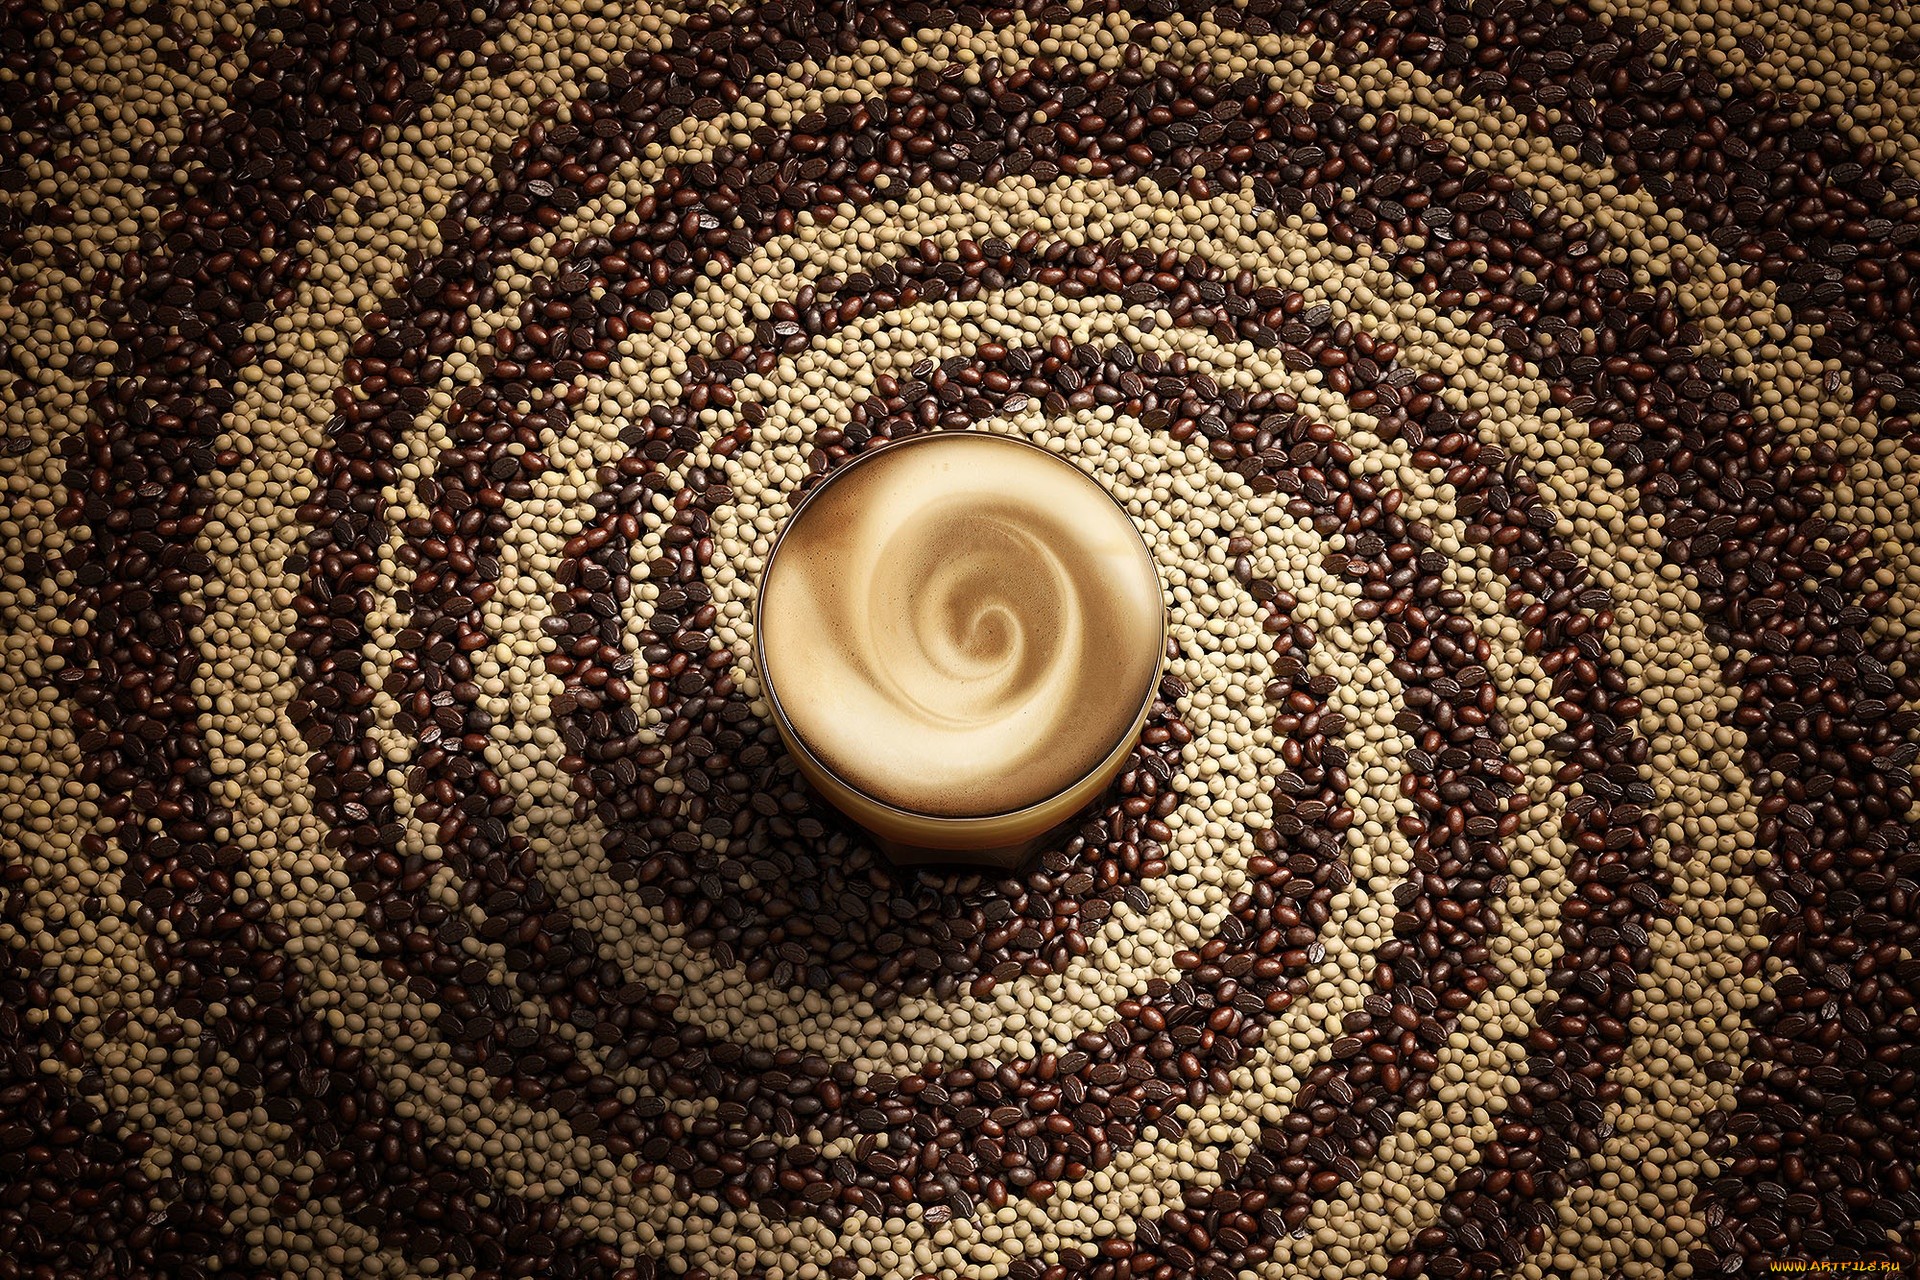 General 1920x1280 coffee coffee beans drinking glass brown swirls watermarked